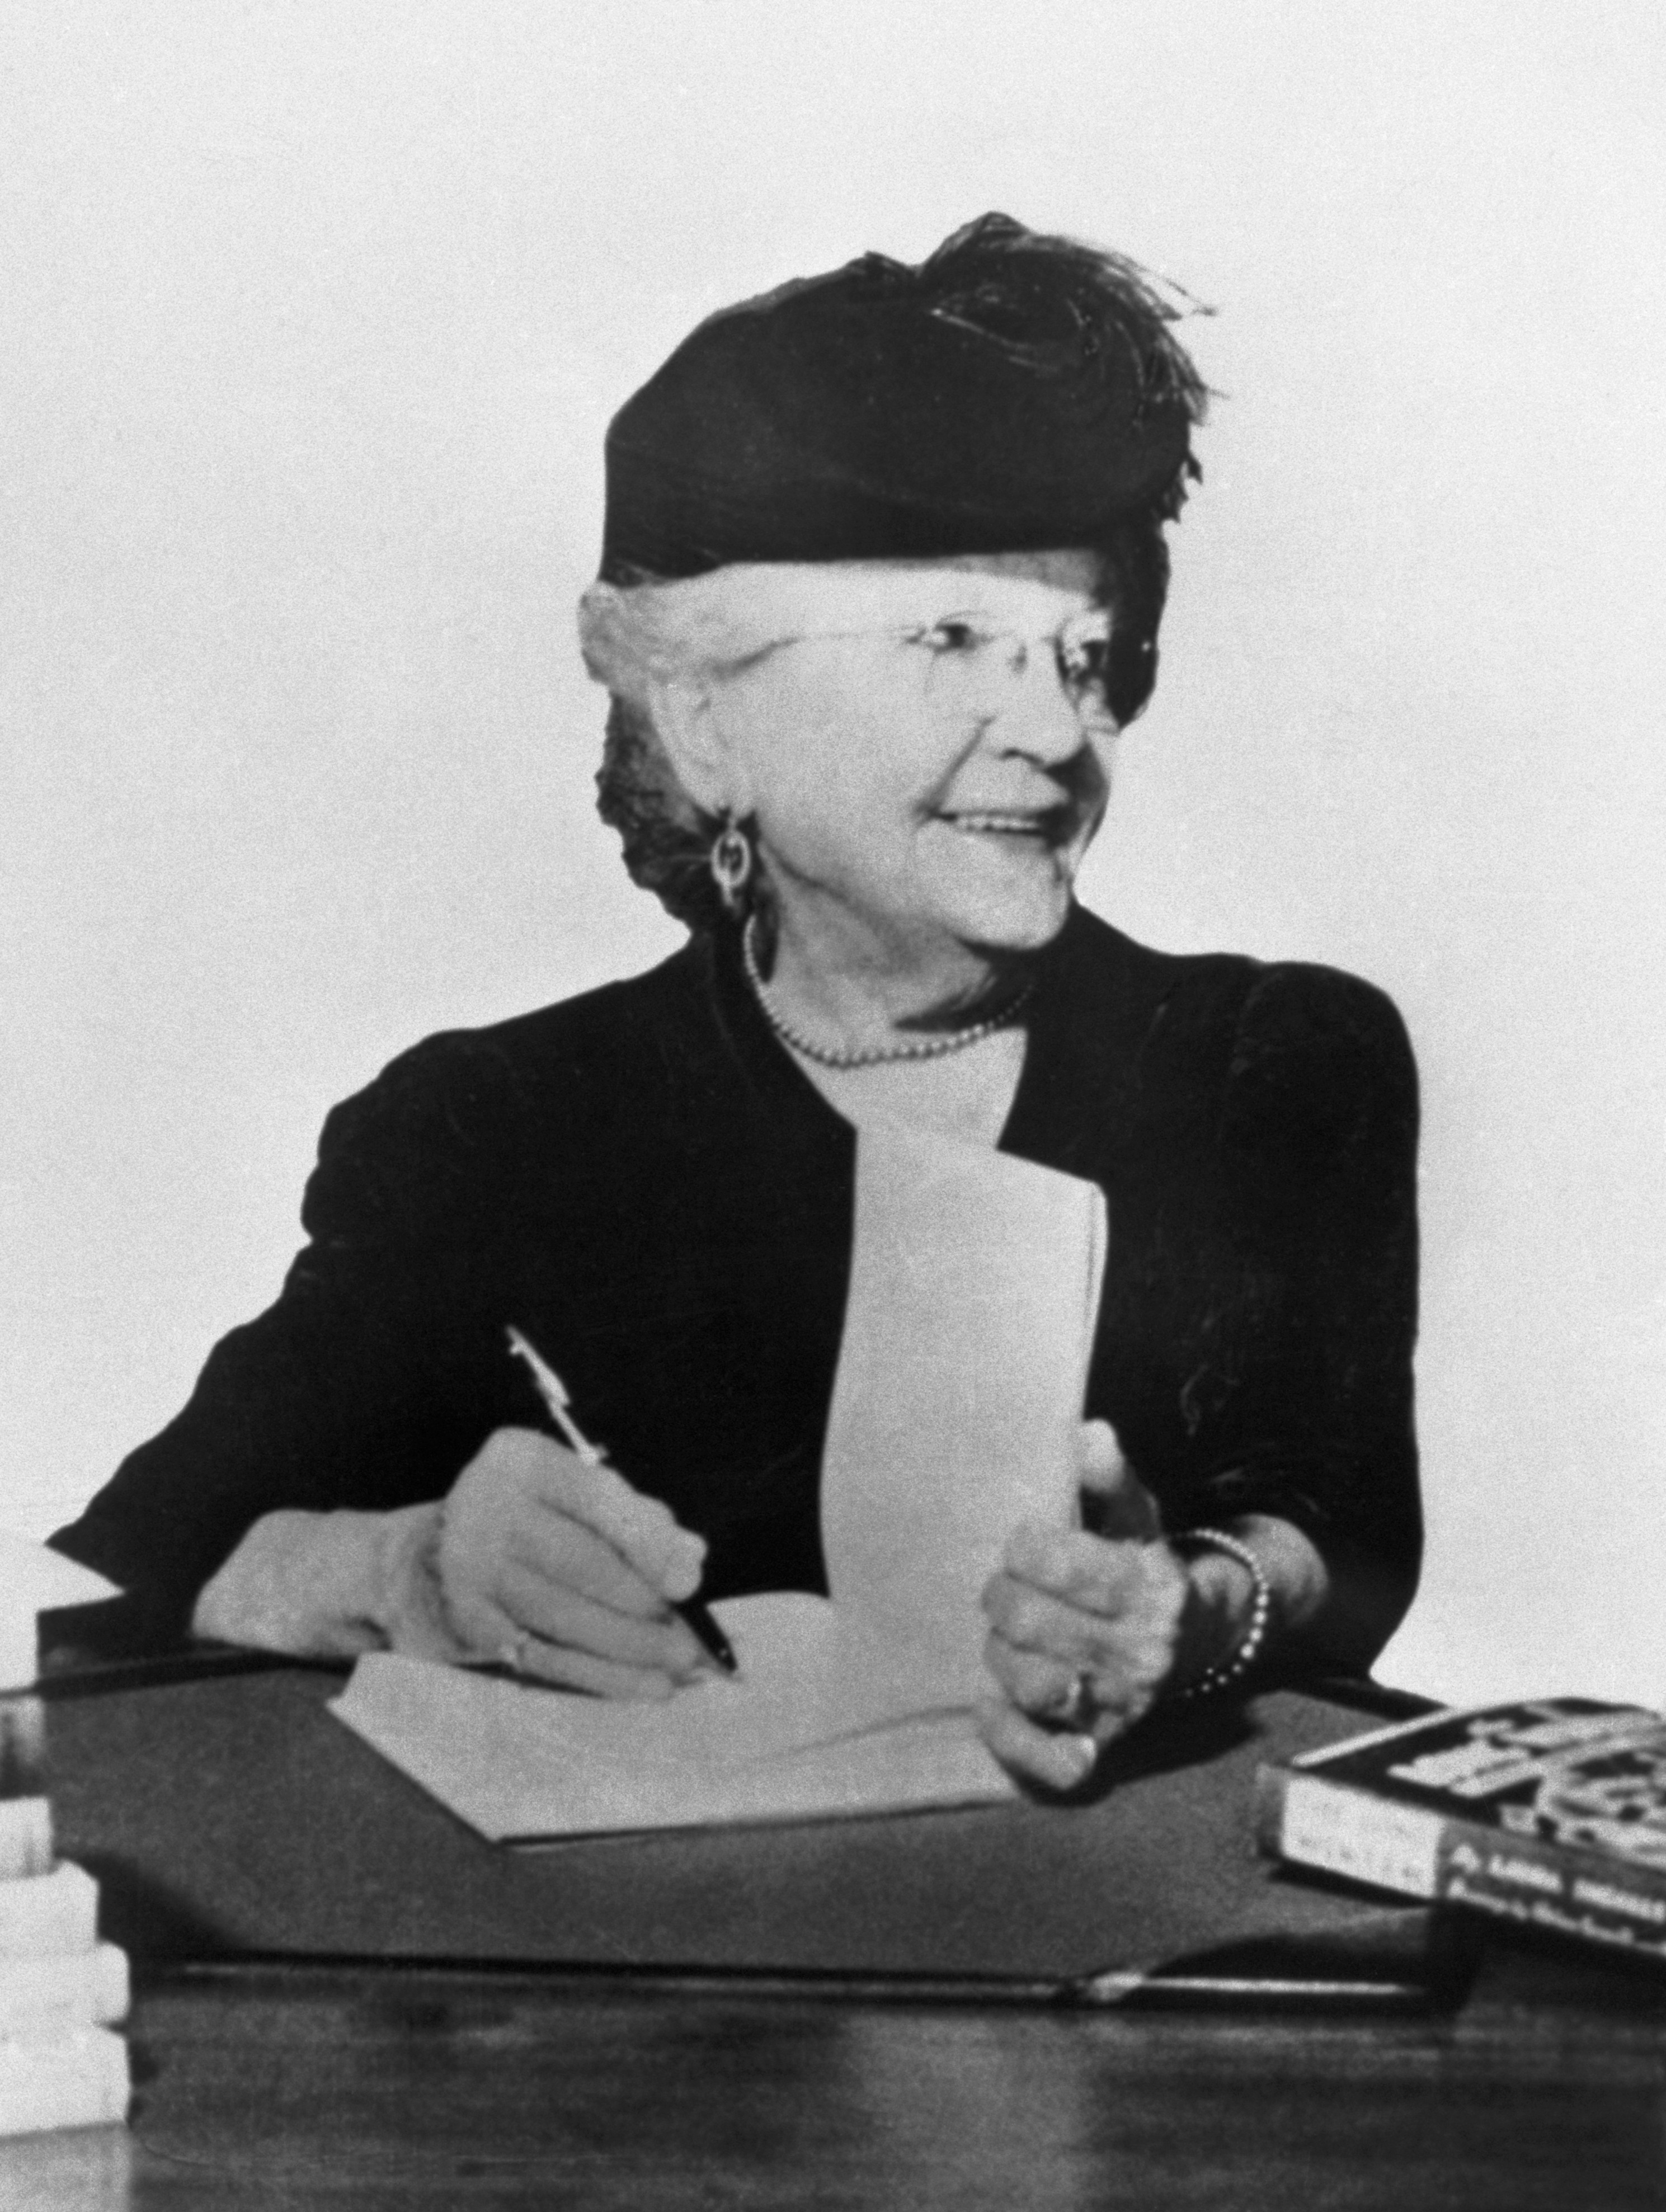 Laura Ingalls Wilder signing books ca. 1930s-1940s. (Bettmann/Corbis)